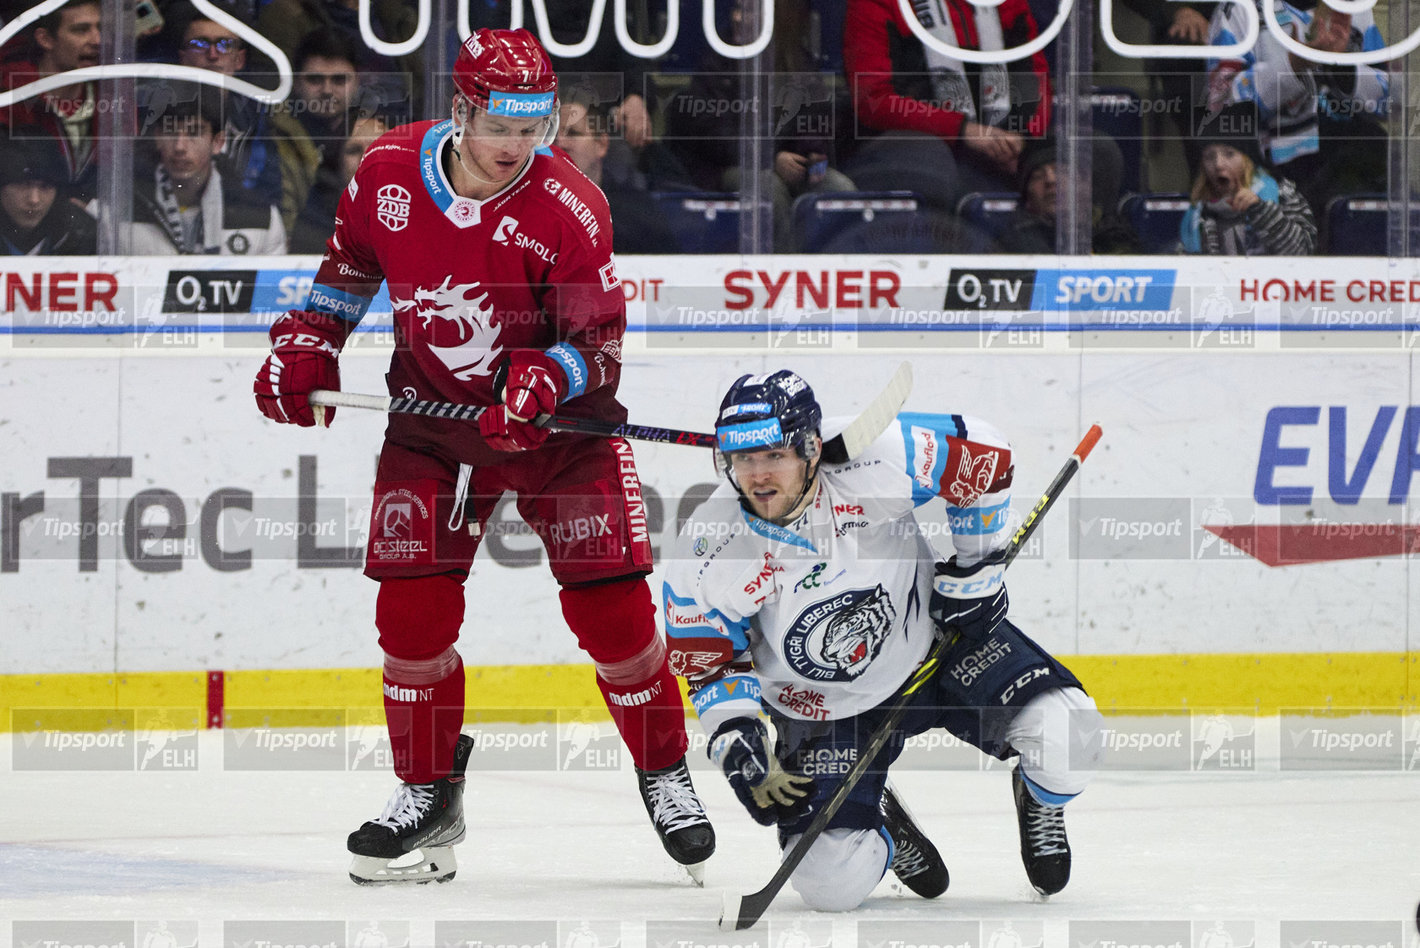 Hokej. Foto: Jiří Princ